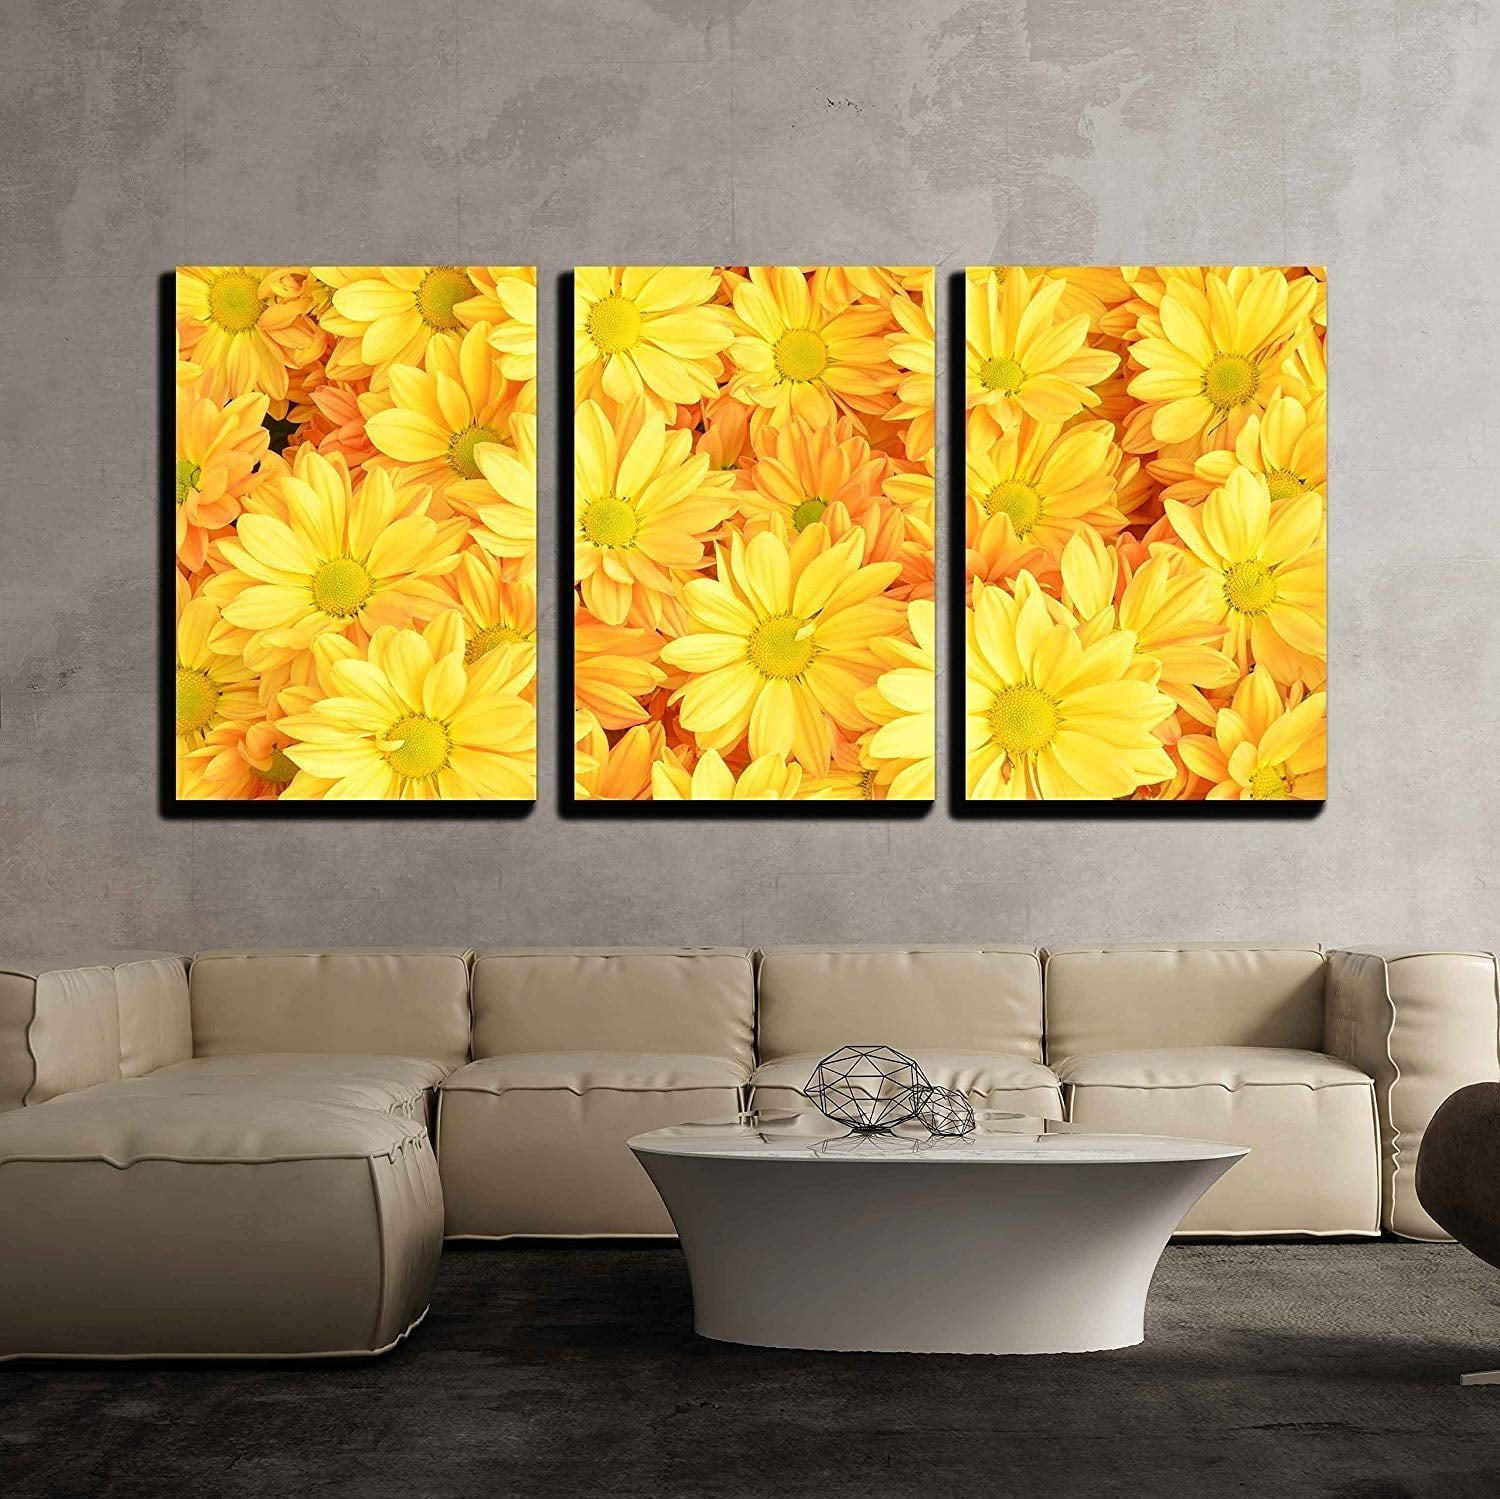 Chrysanthemum Flowers Wall26 16"x24"x3 Panels Canvas Art Wall Decor